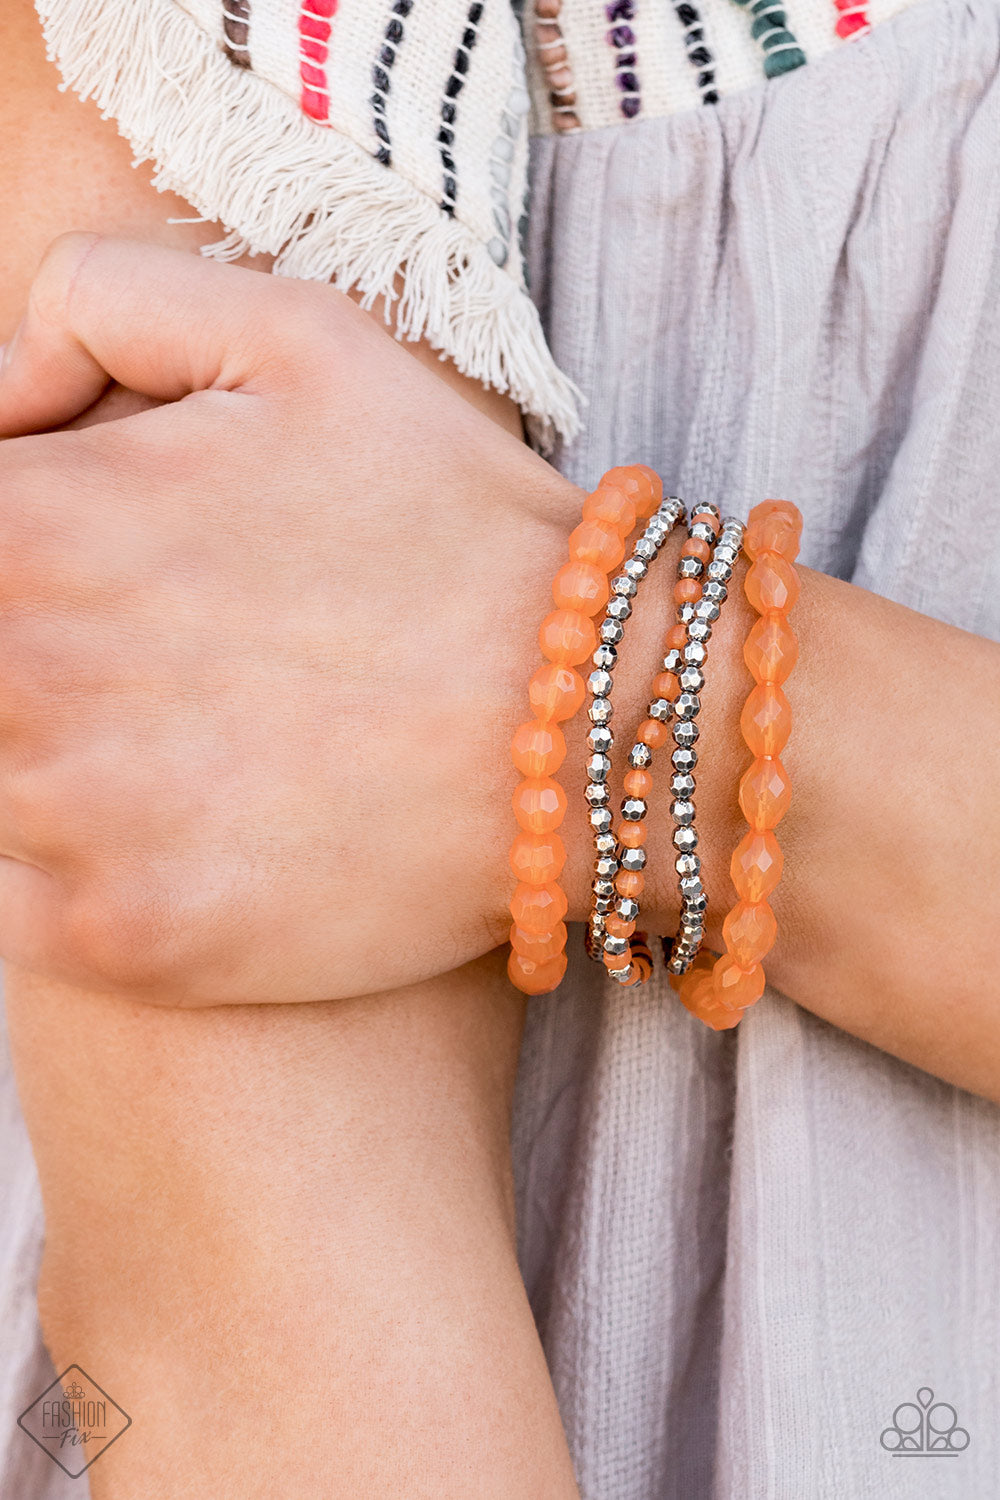 Paparazzi Accessories - Sugary Sweet - Orange Bracelet Fashion Fix June 2020